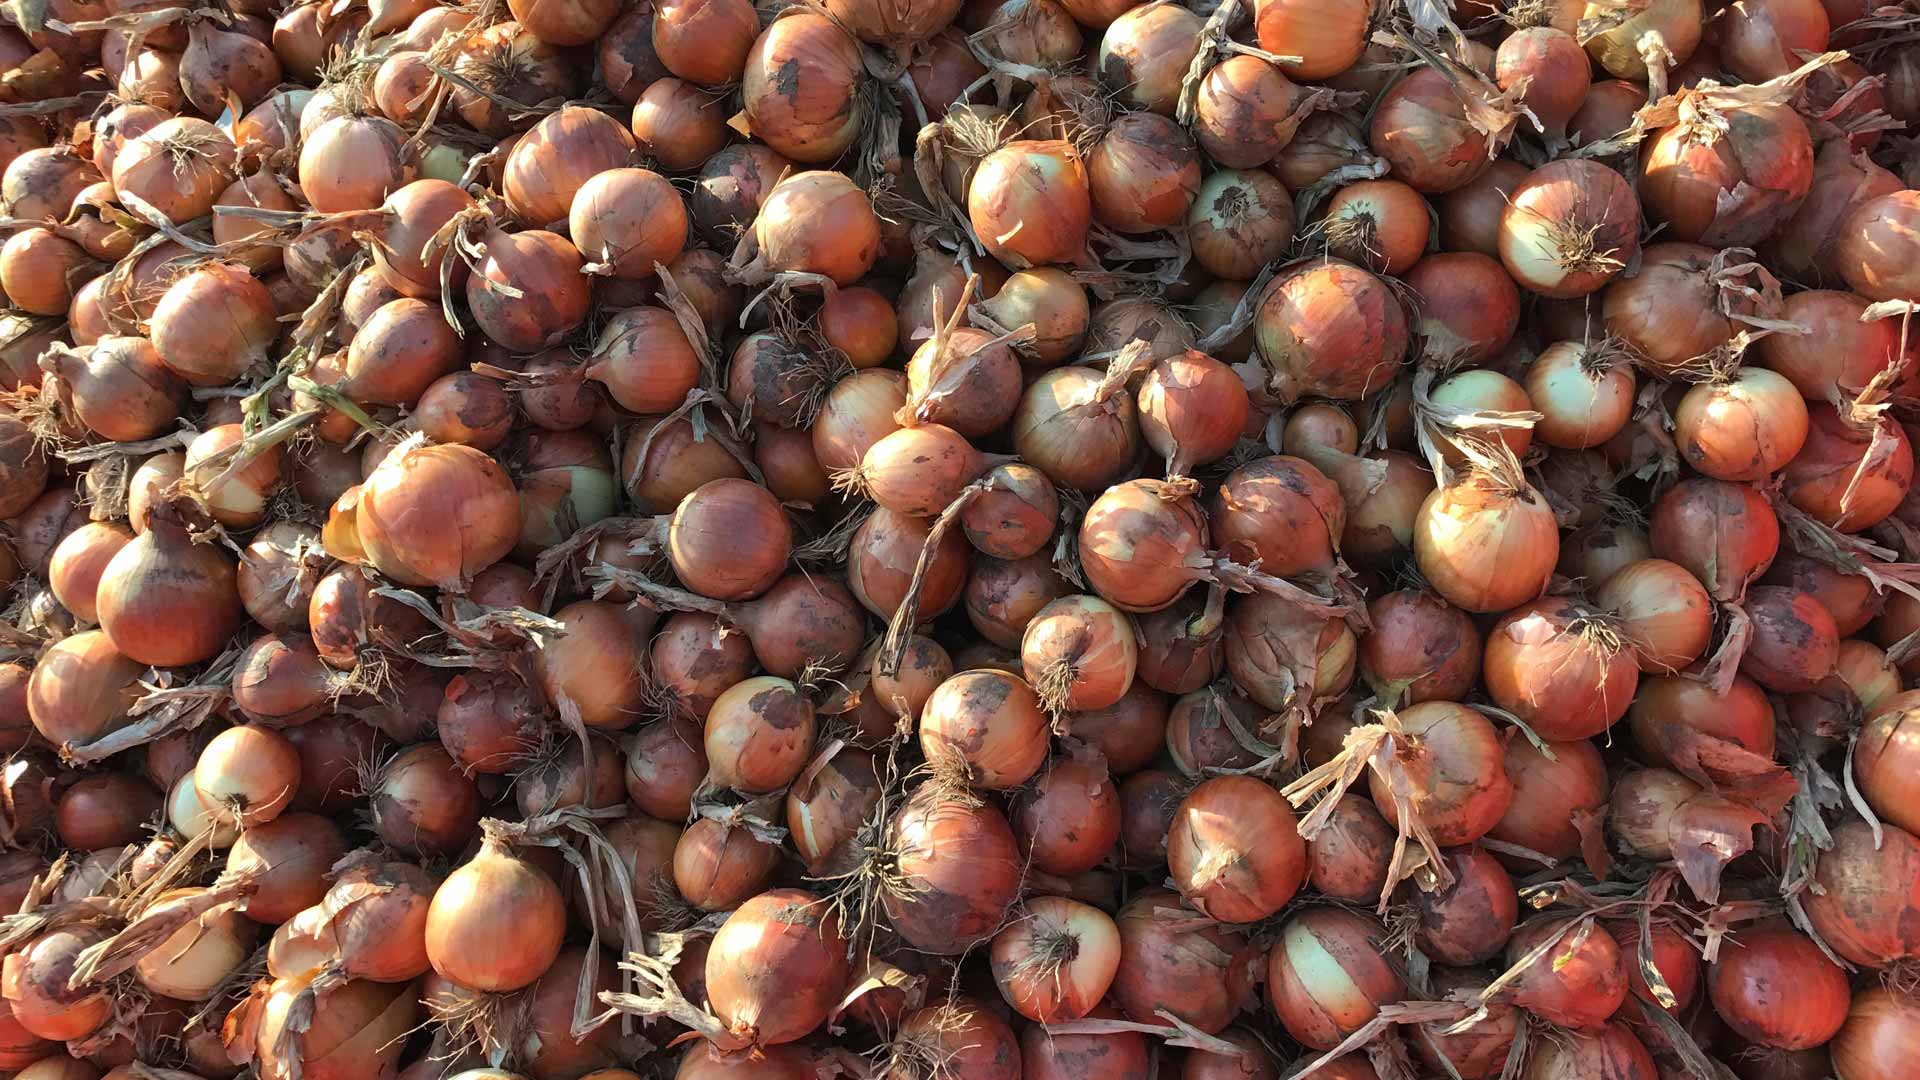 Onions from Međimurje